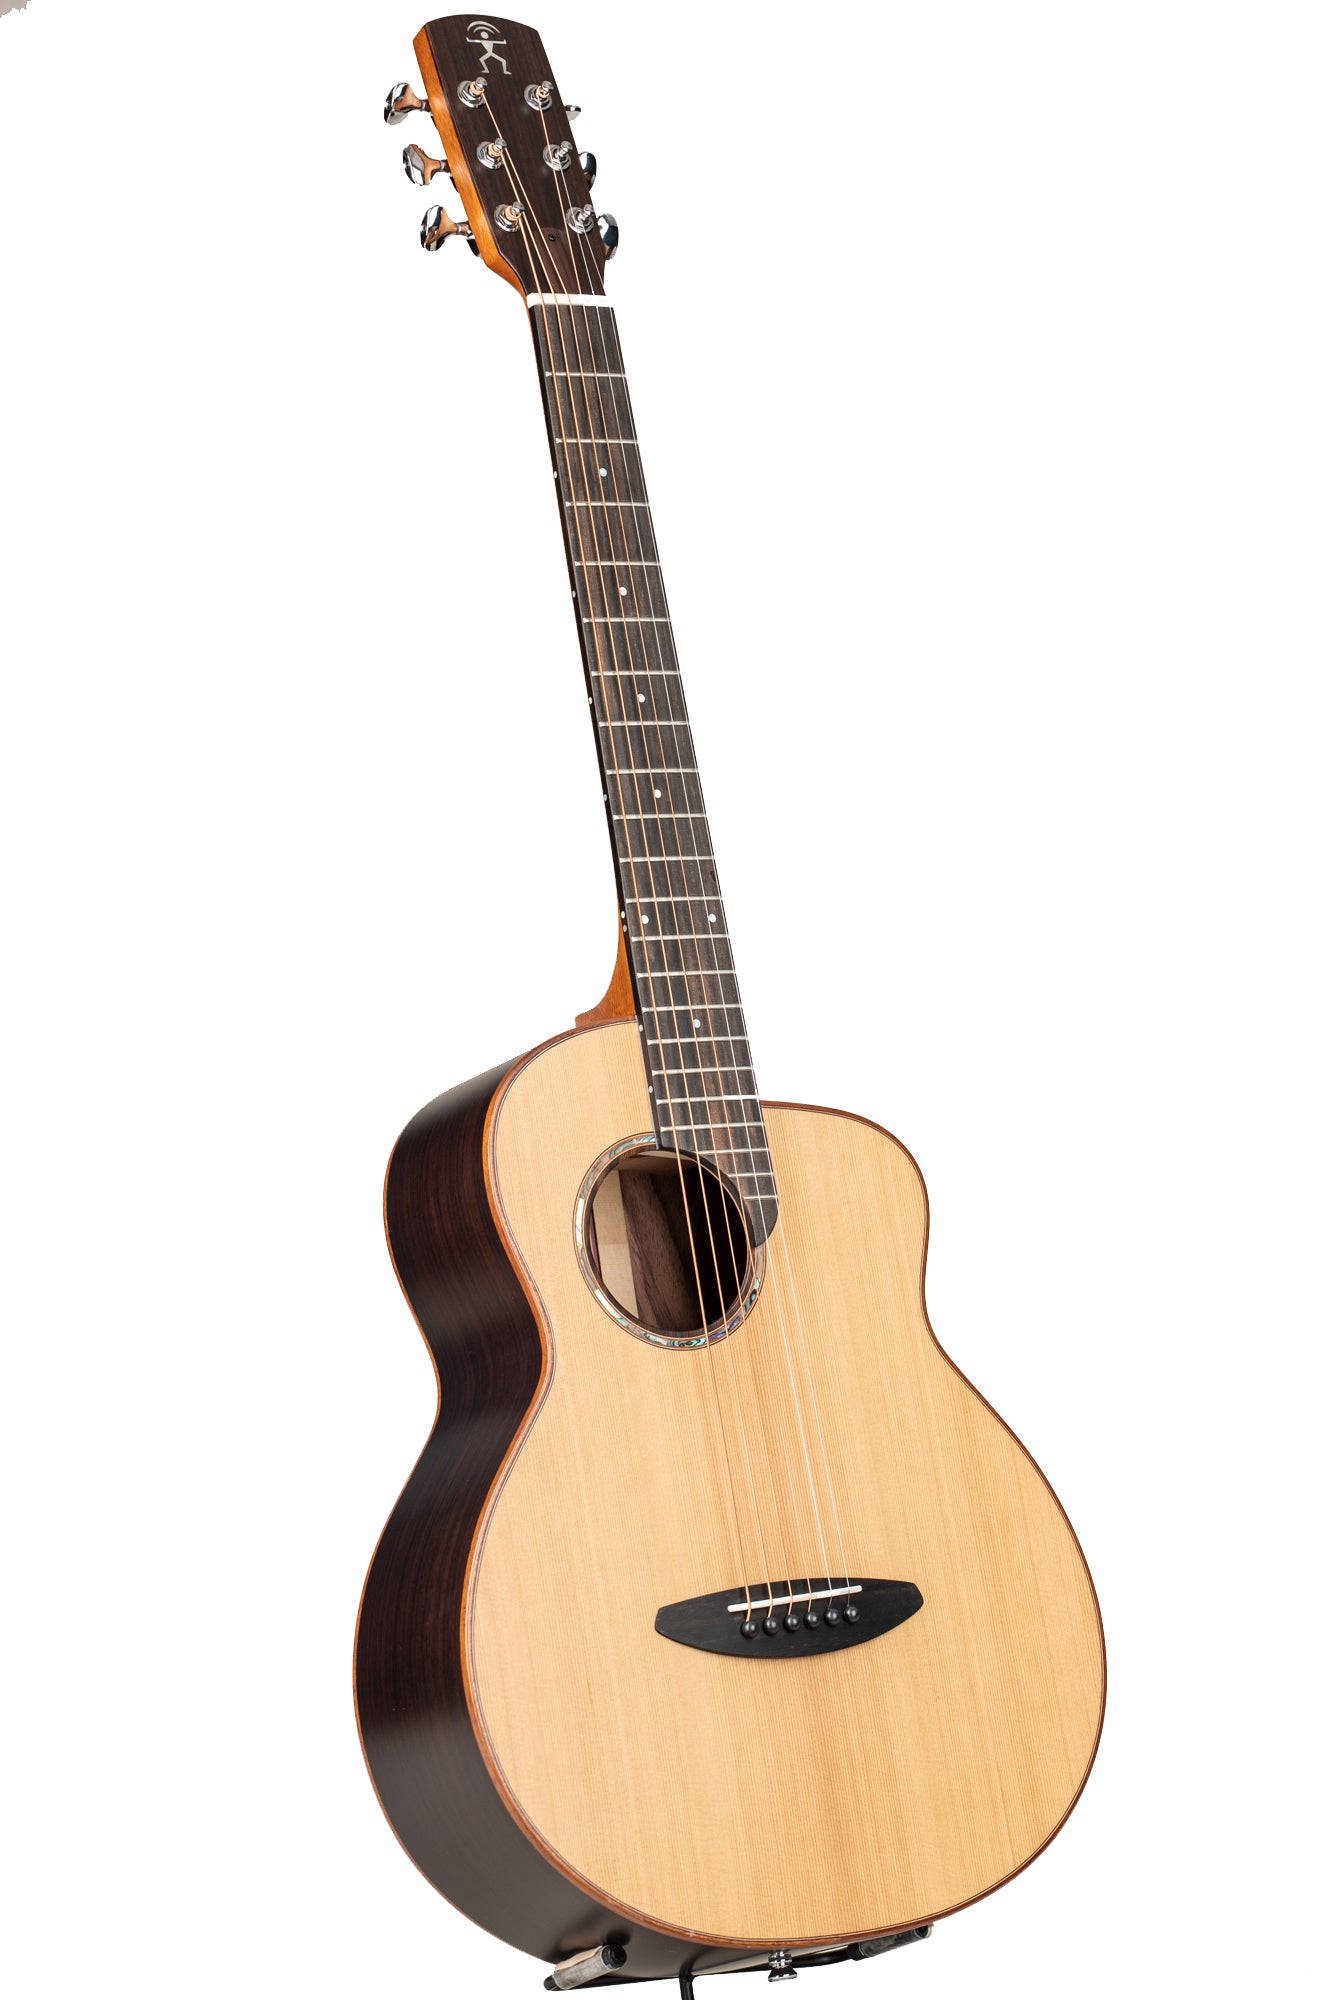 Acoustic Travel Series M60 Cedar / Rosewood Travel Size Guitar